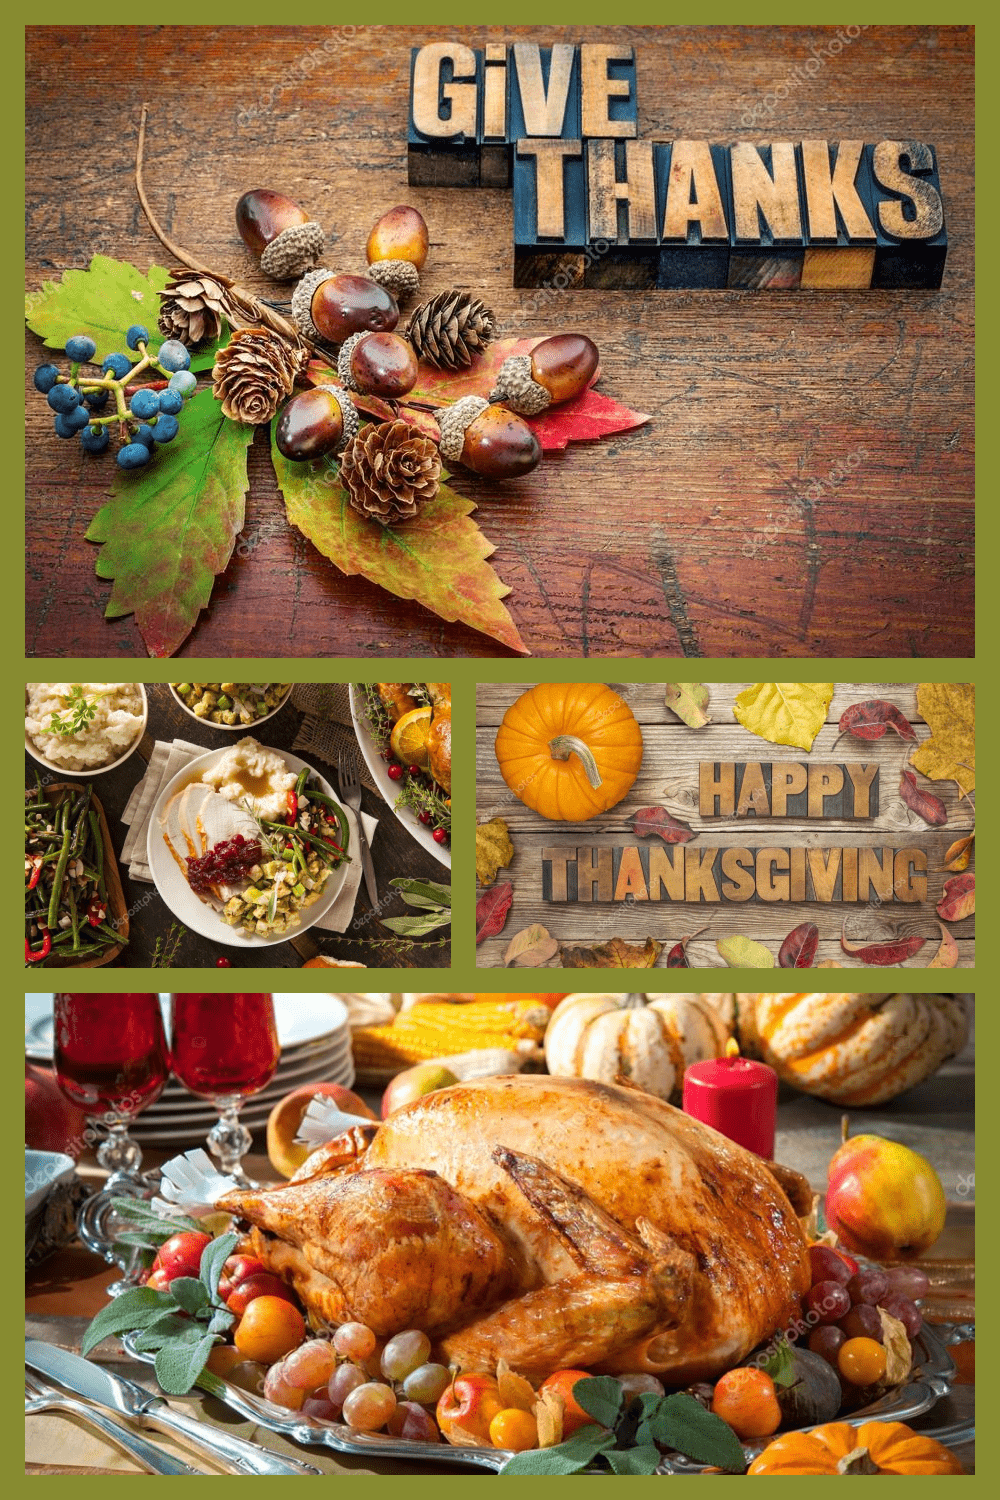 Turkey on thanksgiving.